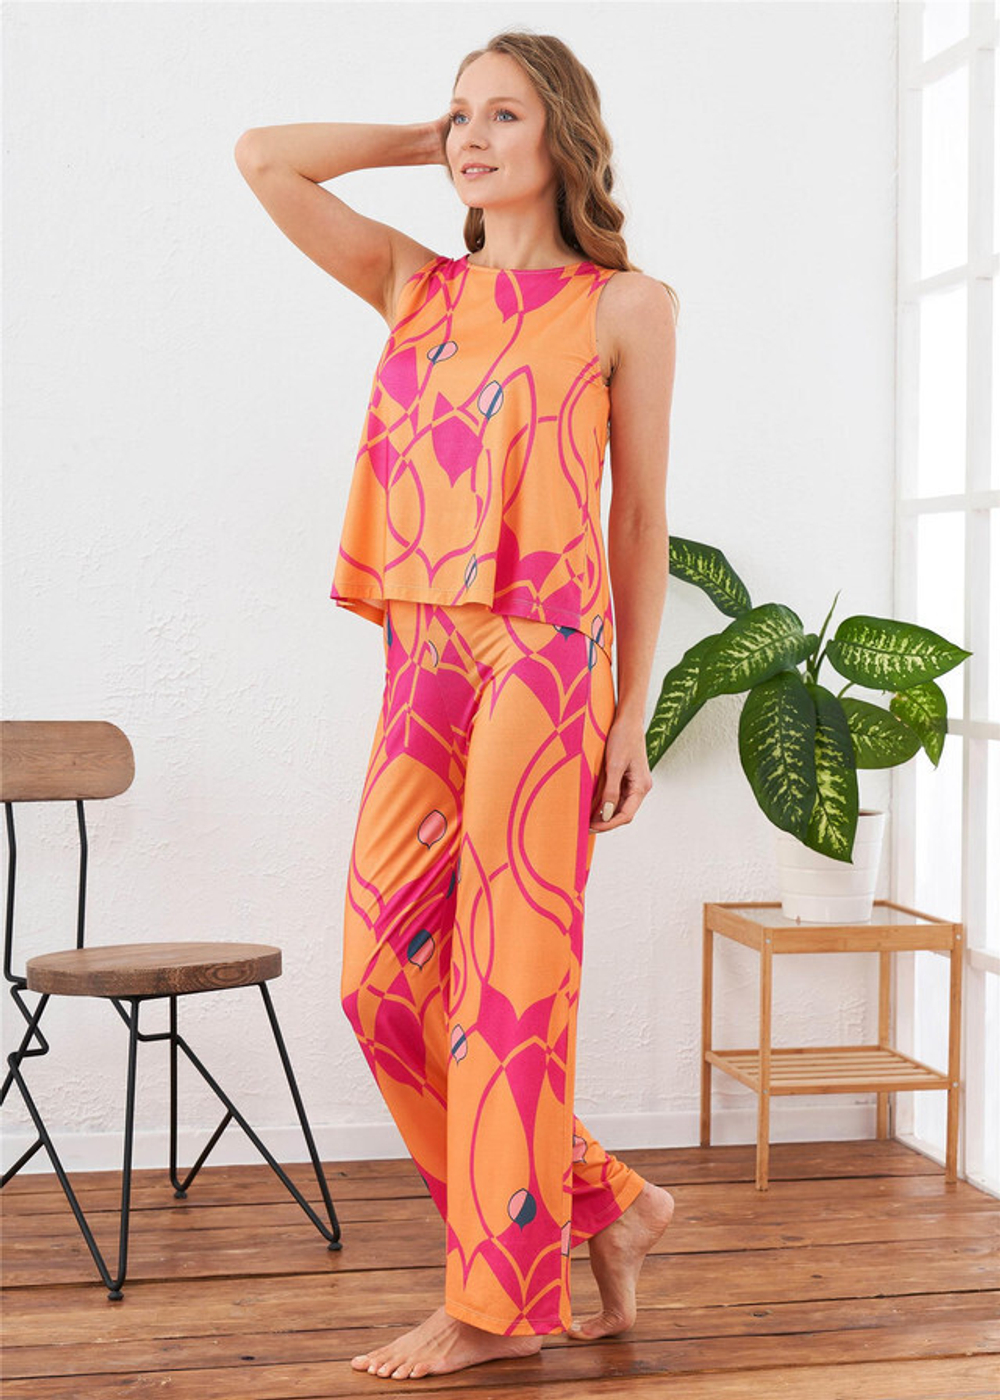 RELAX MODE / Пижама женская со штанами летняя вискоза домашний костюм - 10697